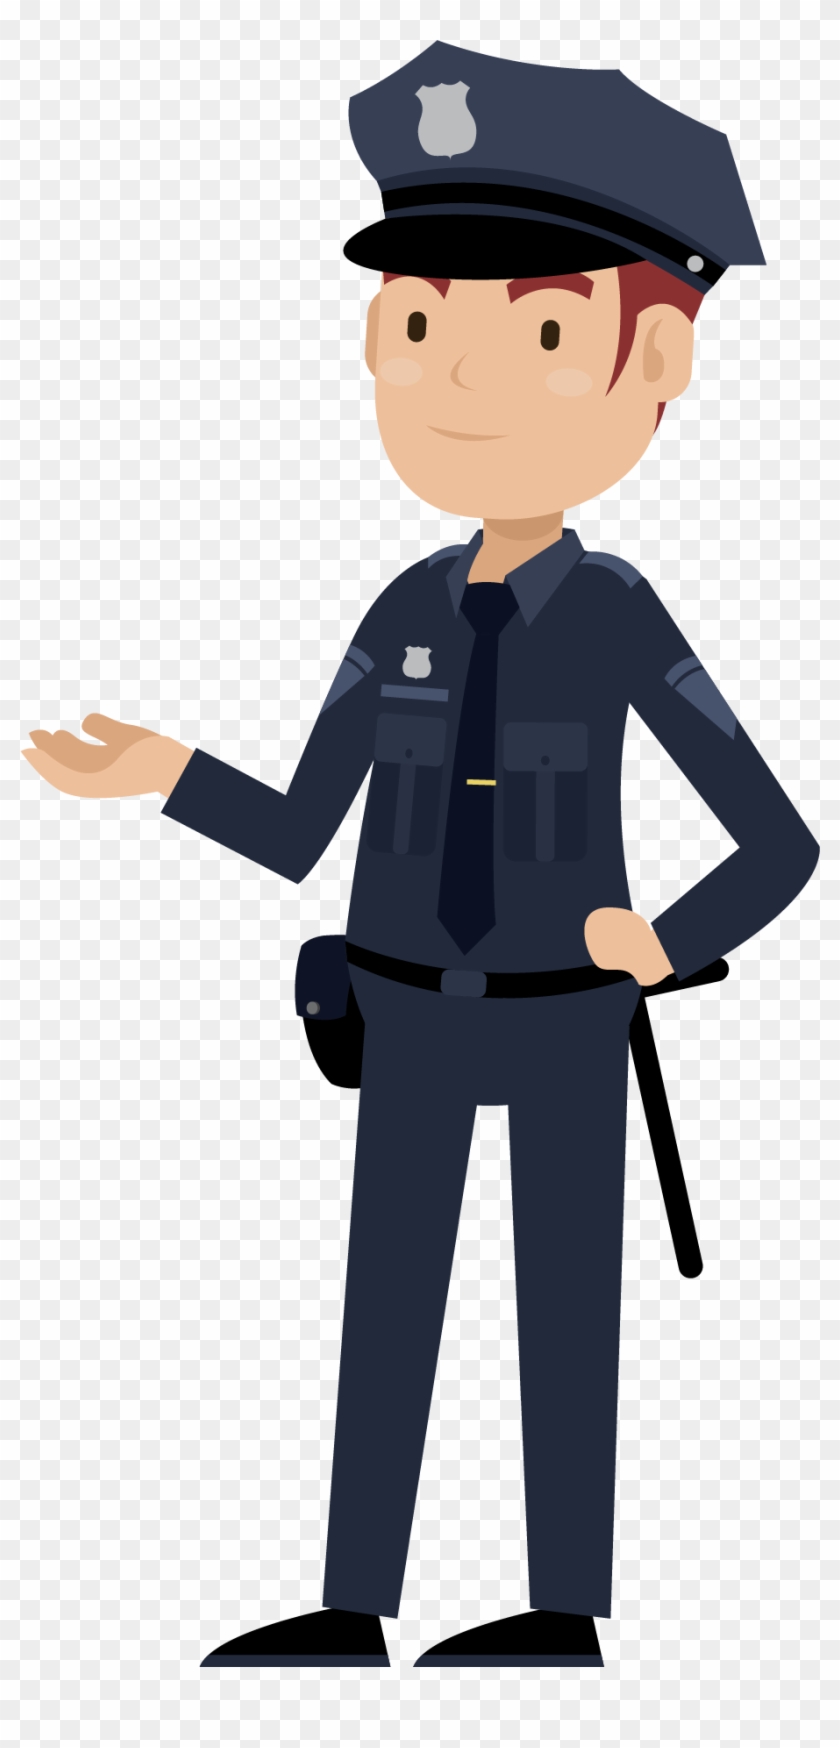 Cartoon Police Officer Public Security Crime - Cop Cartoon Png #446814